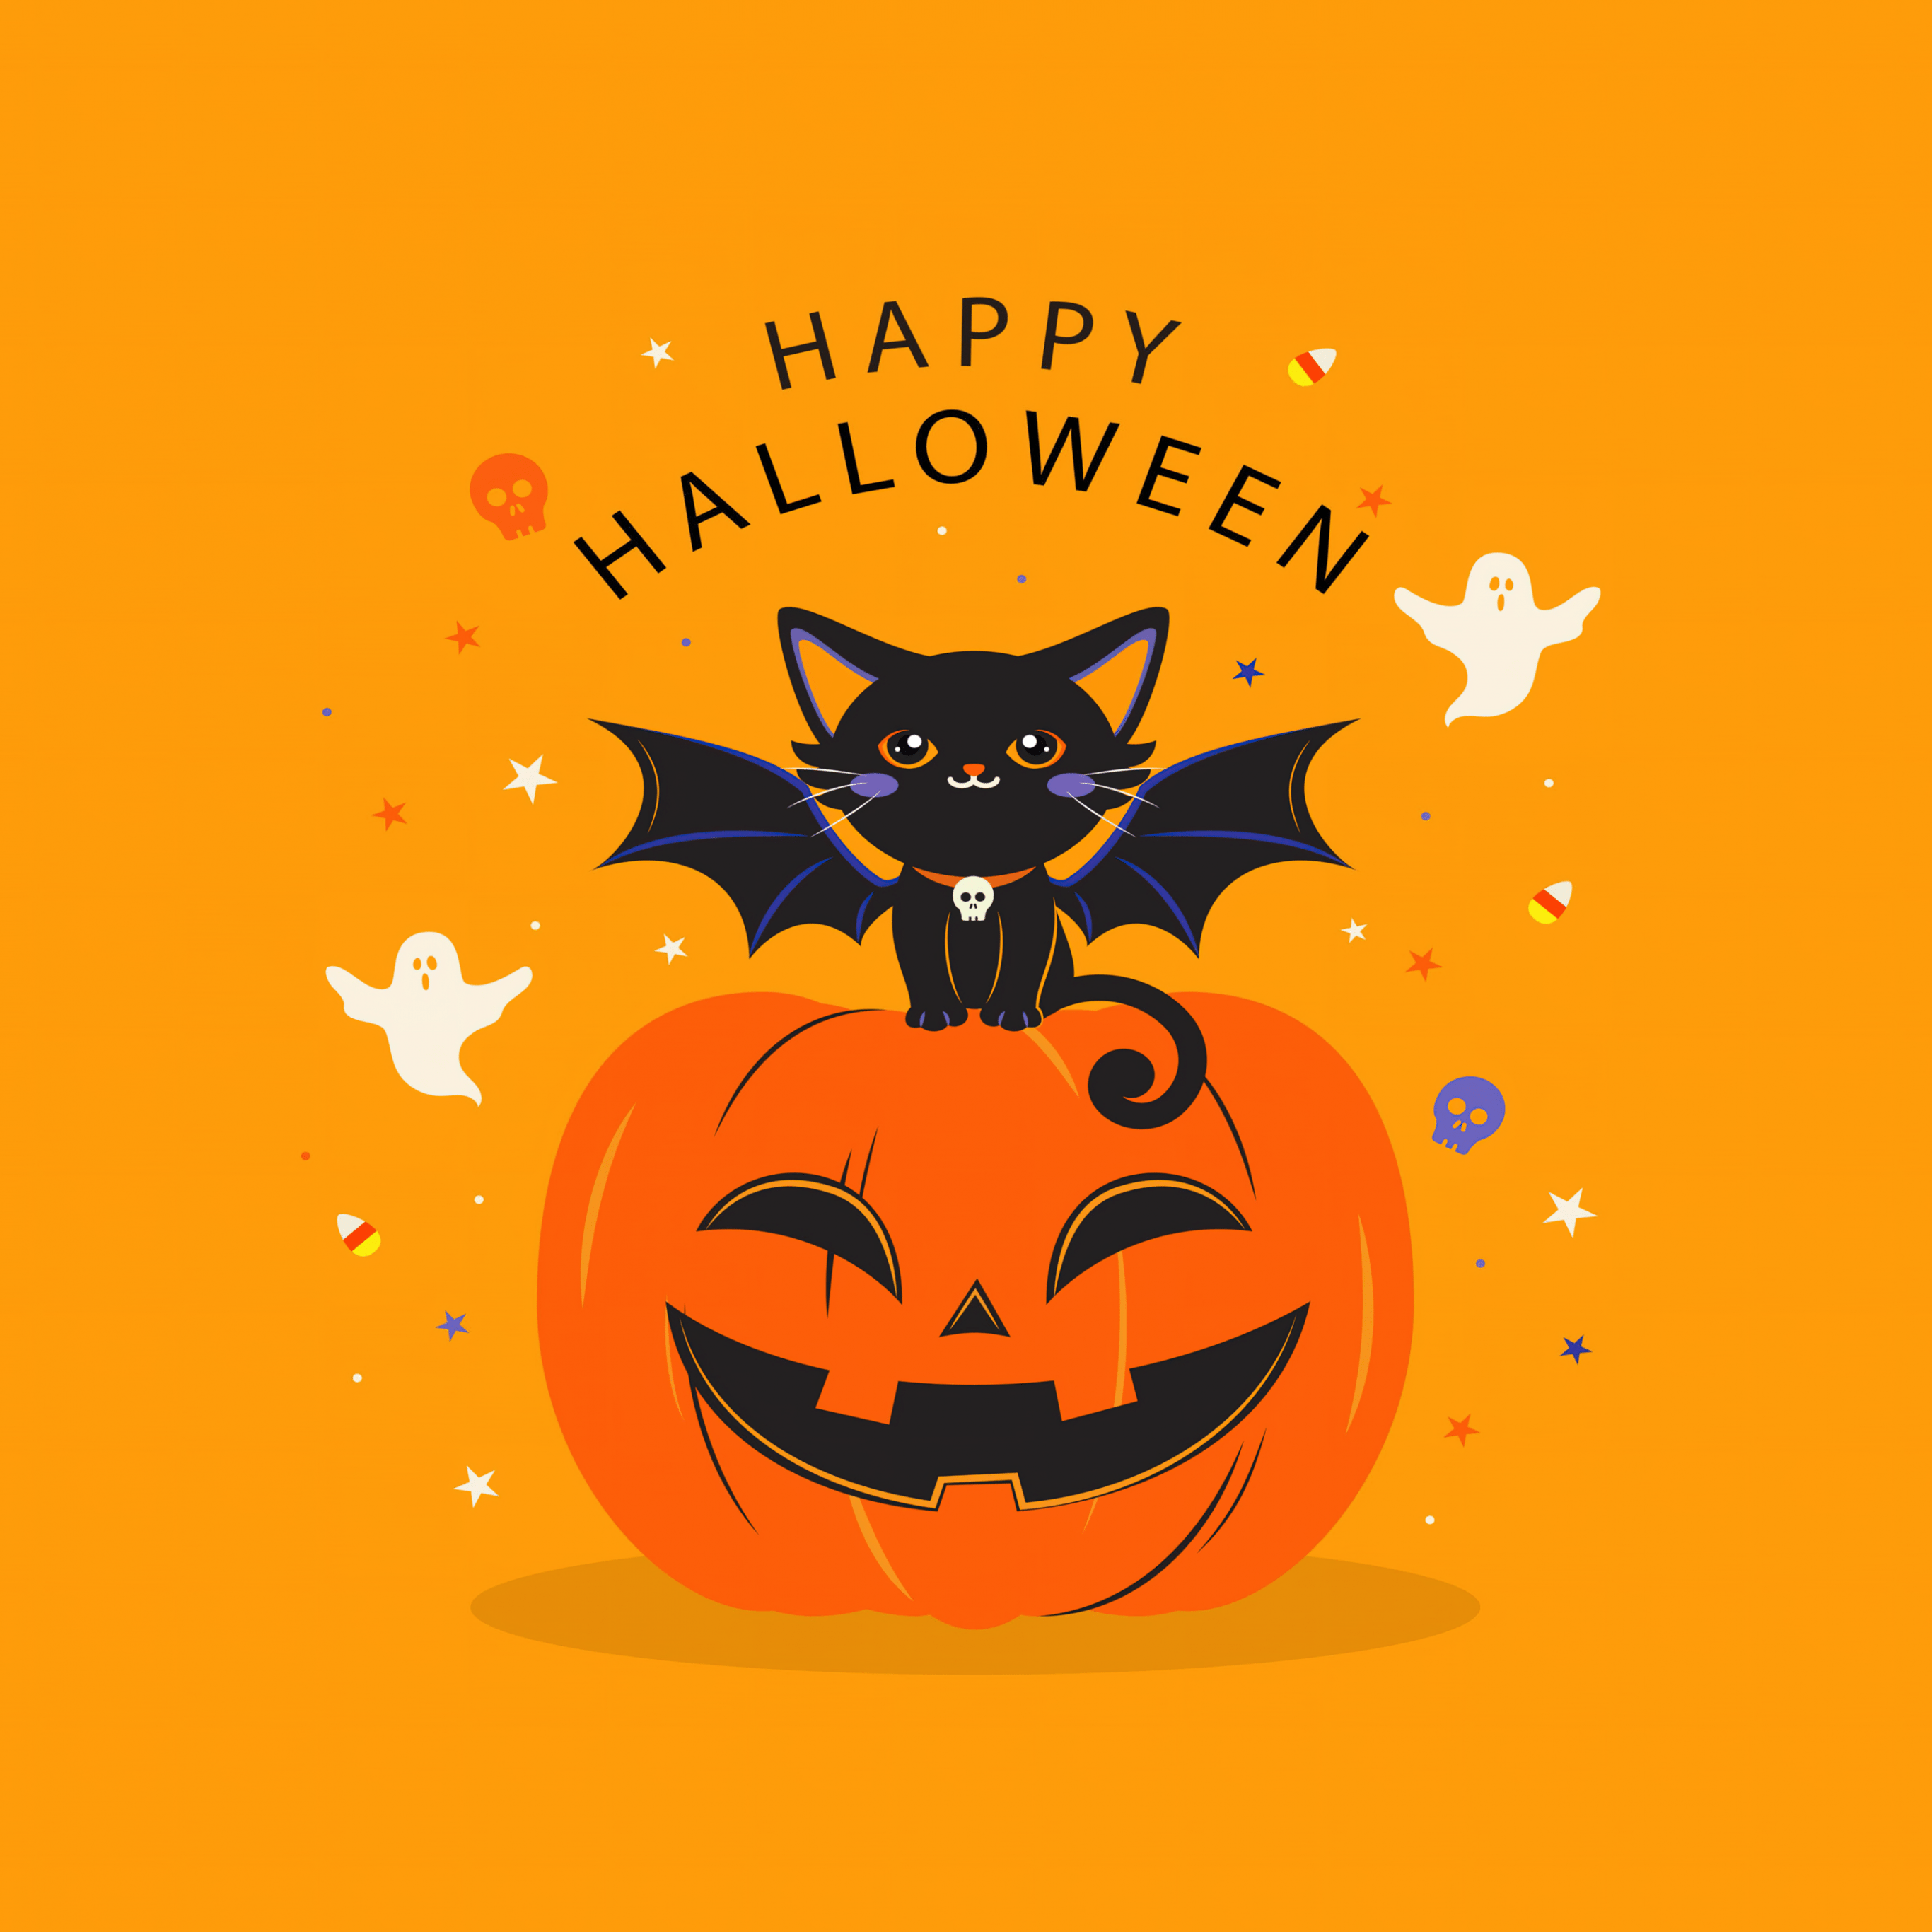 A black cat with bat wings sitting on a pumpkin - Cute Halloween, Halloween